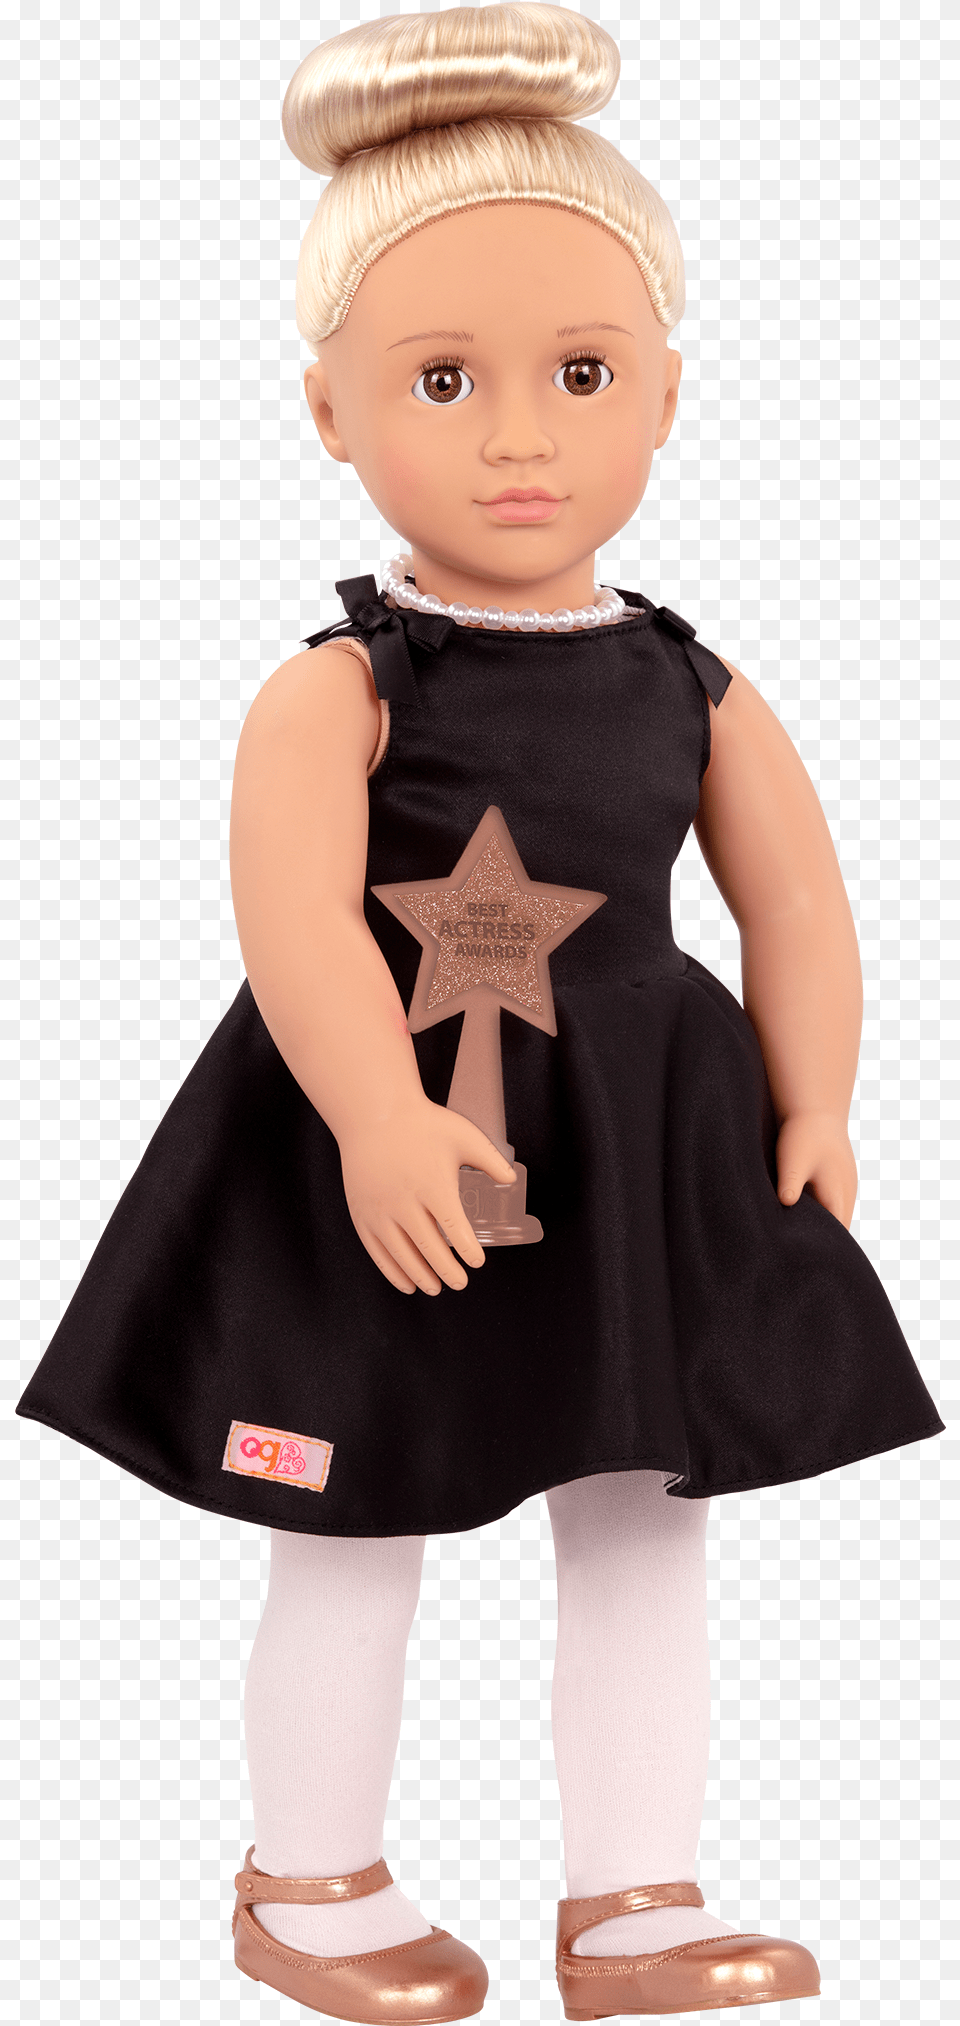 Rafaella Regular 18 Inch Actress Doll Holding Award Our Generation Rafaella, Toy, Person, Girl, Child Free Png